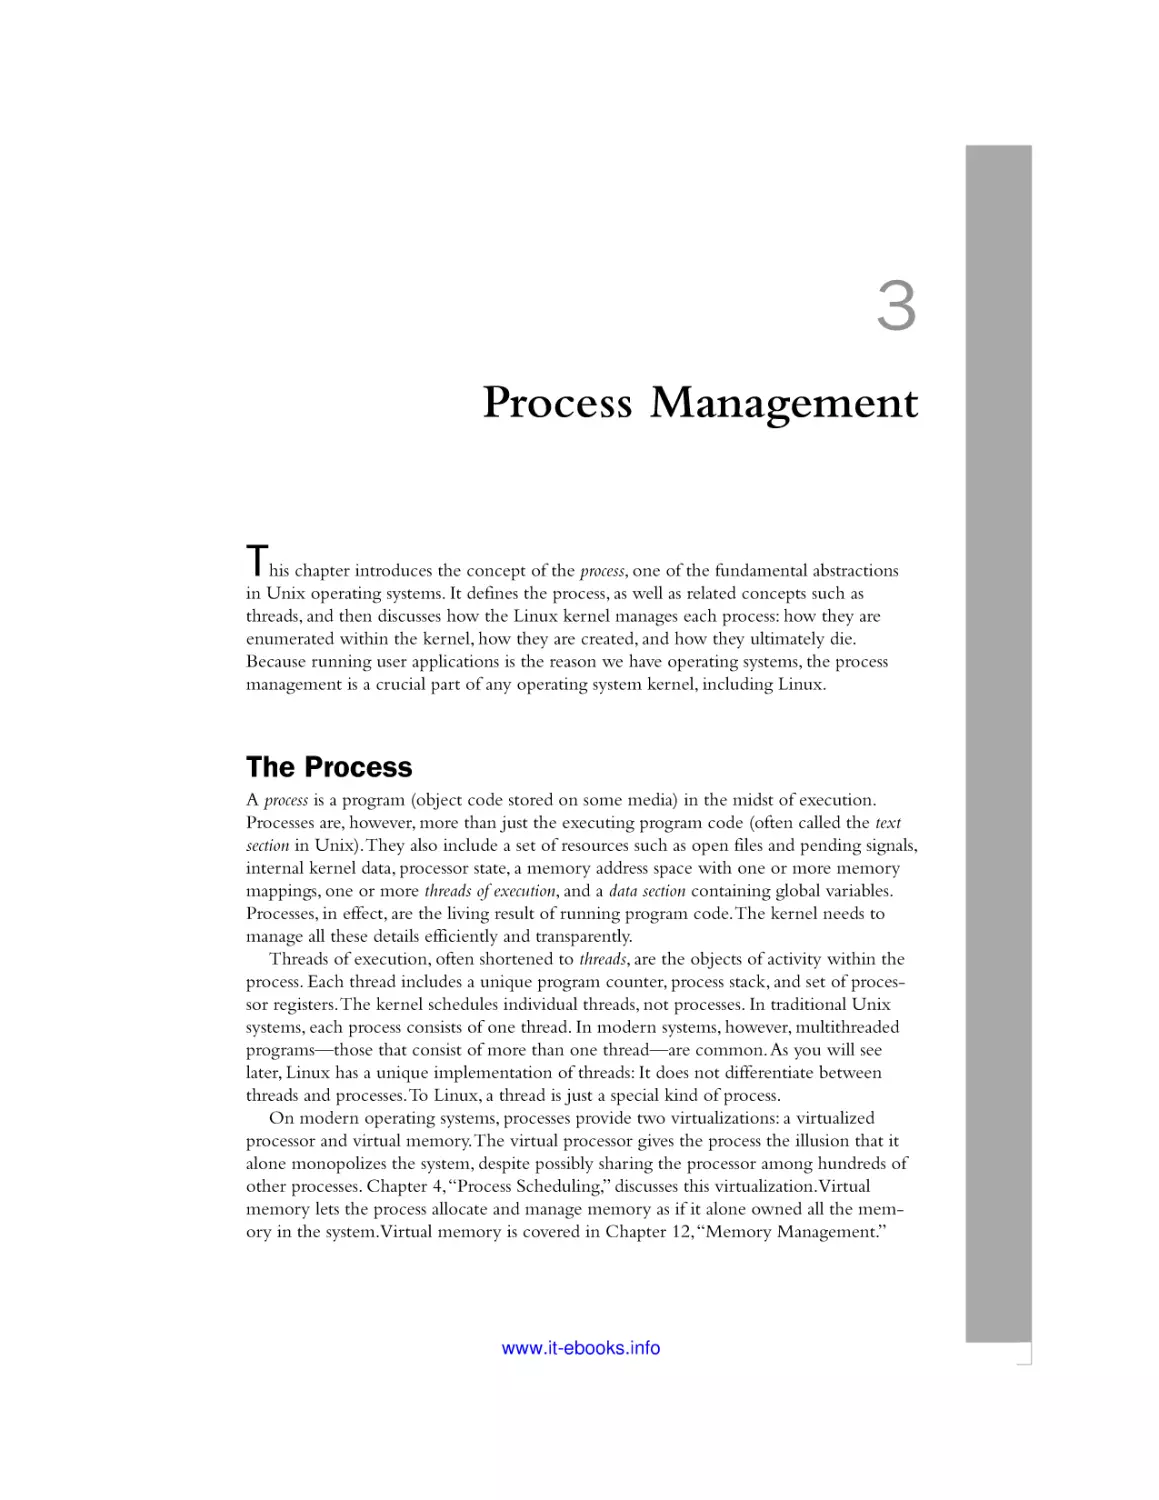 3 Process Management
The Process